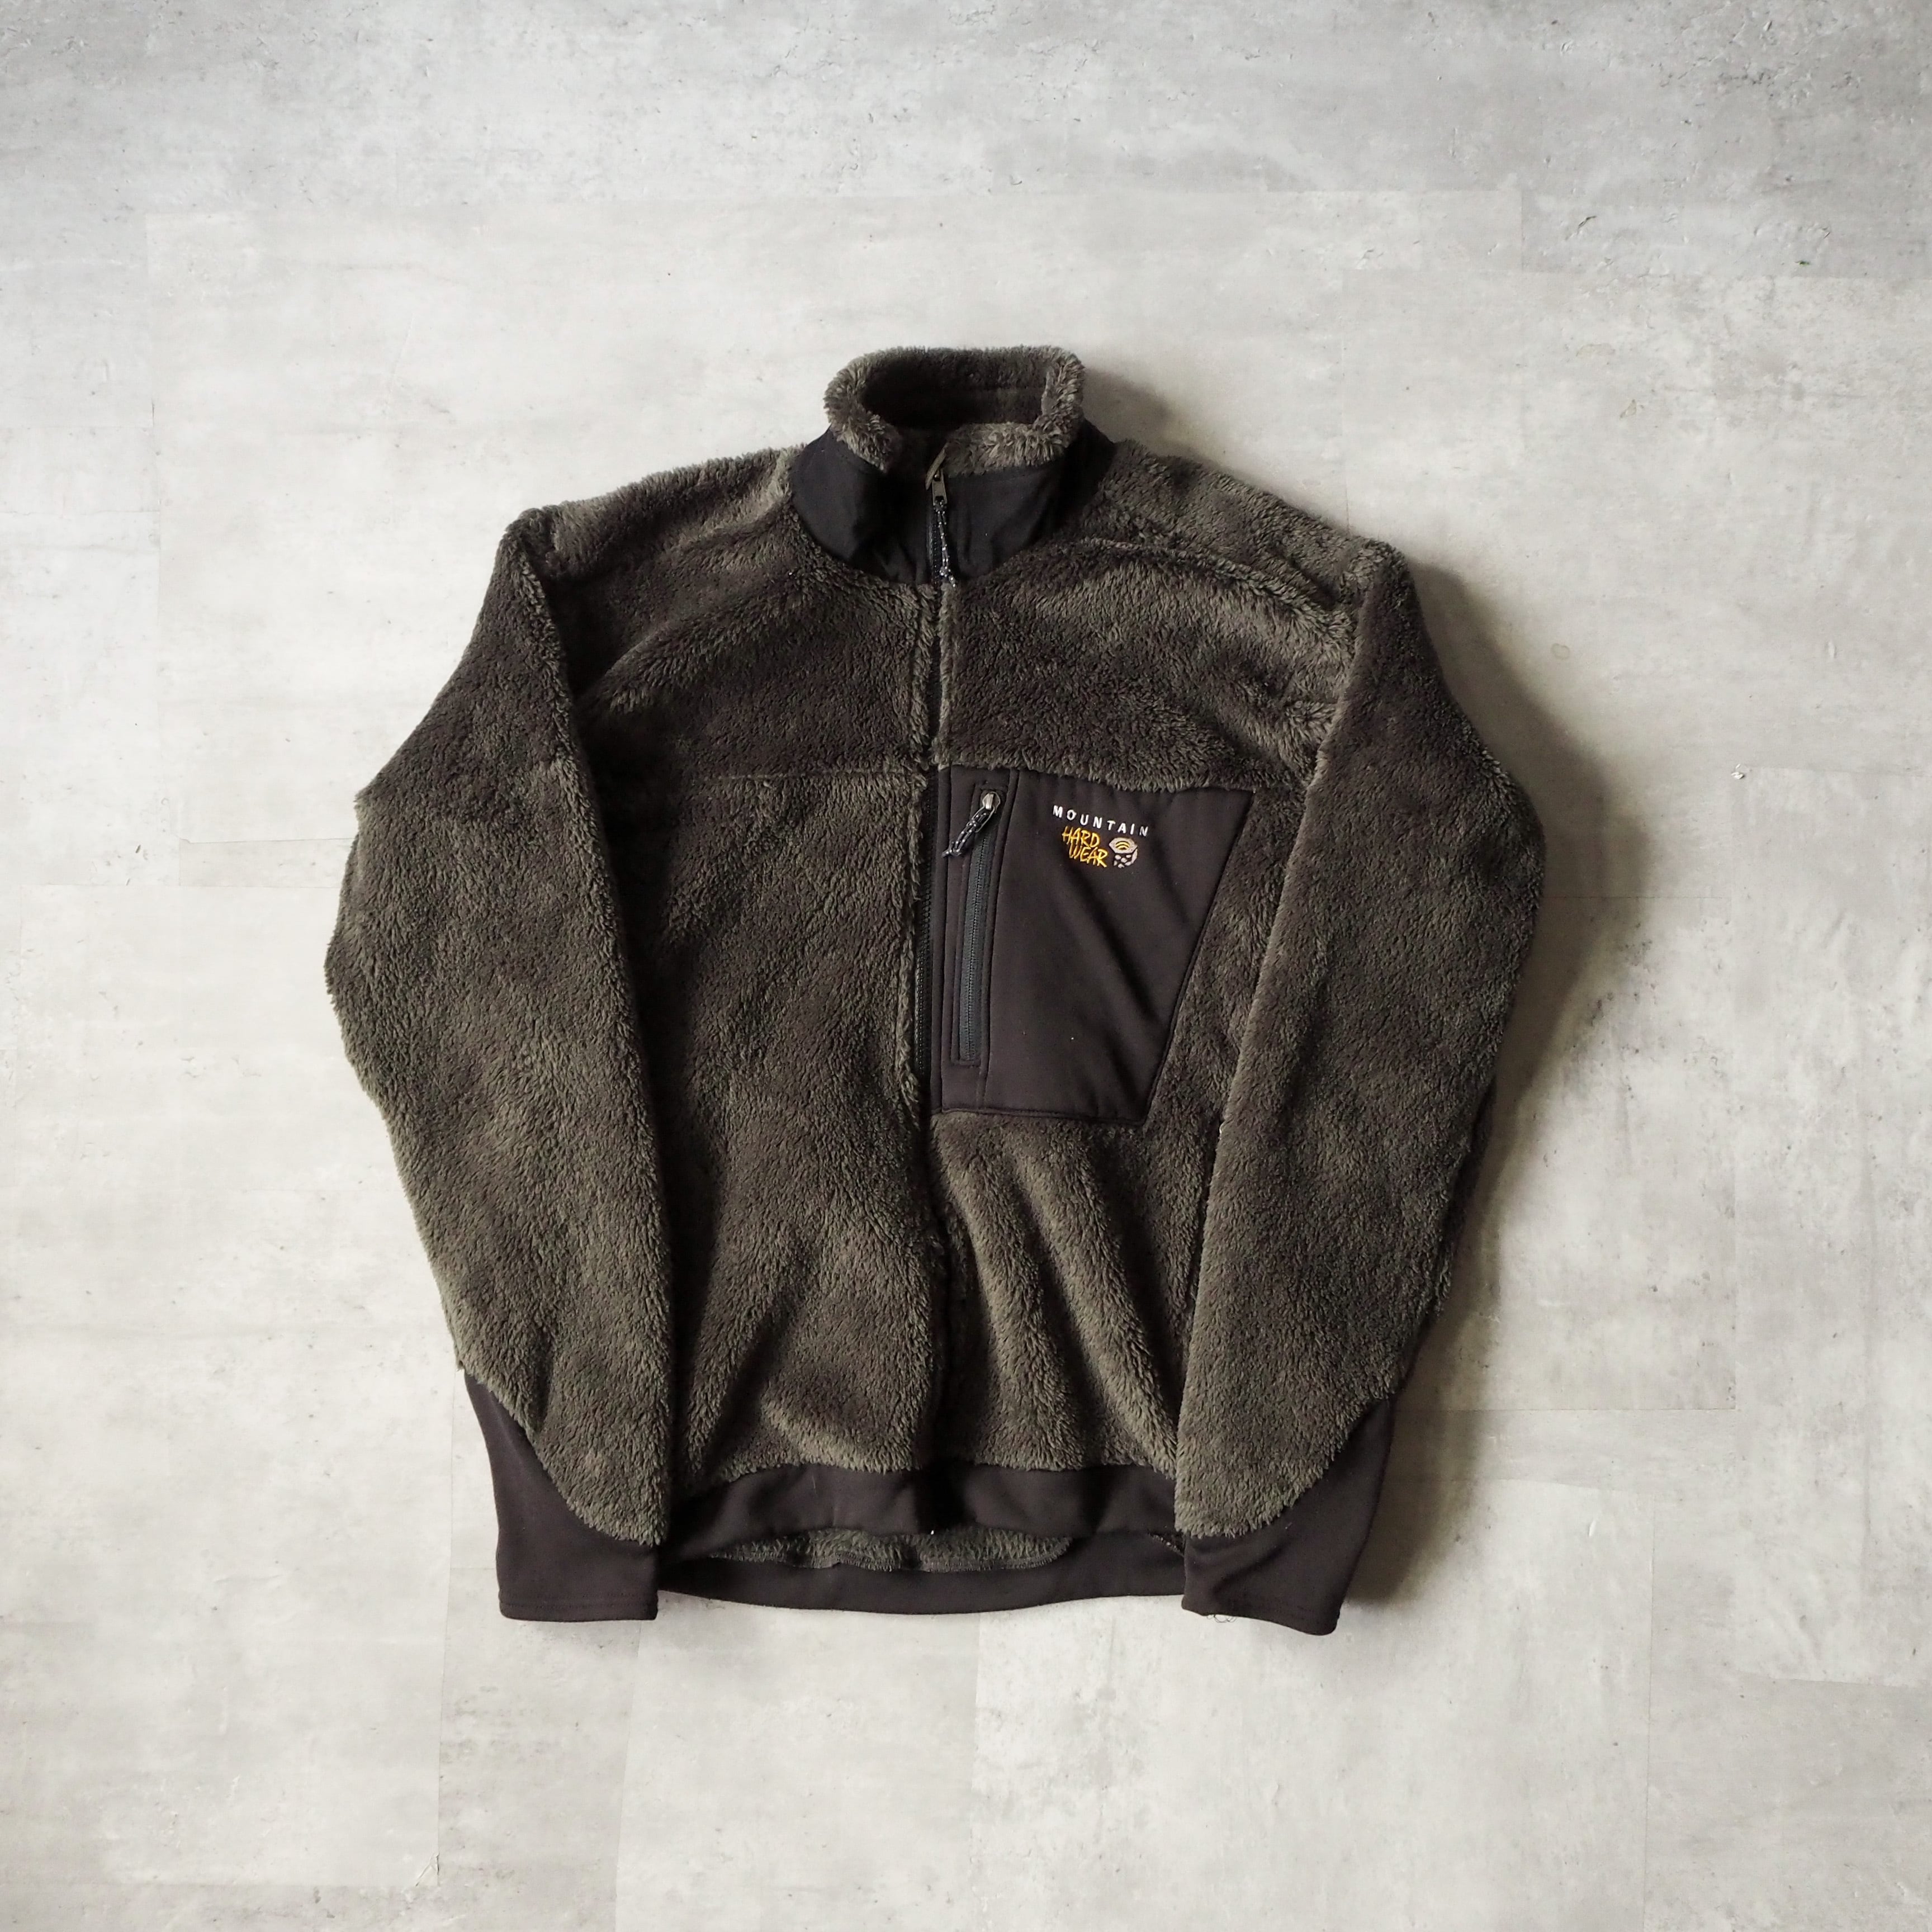 90s 00s “mountain hardwear” fleece jacket made in USA 90年代 00年代 マウンテンハードウェア  フリースジャケット polartec